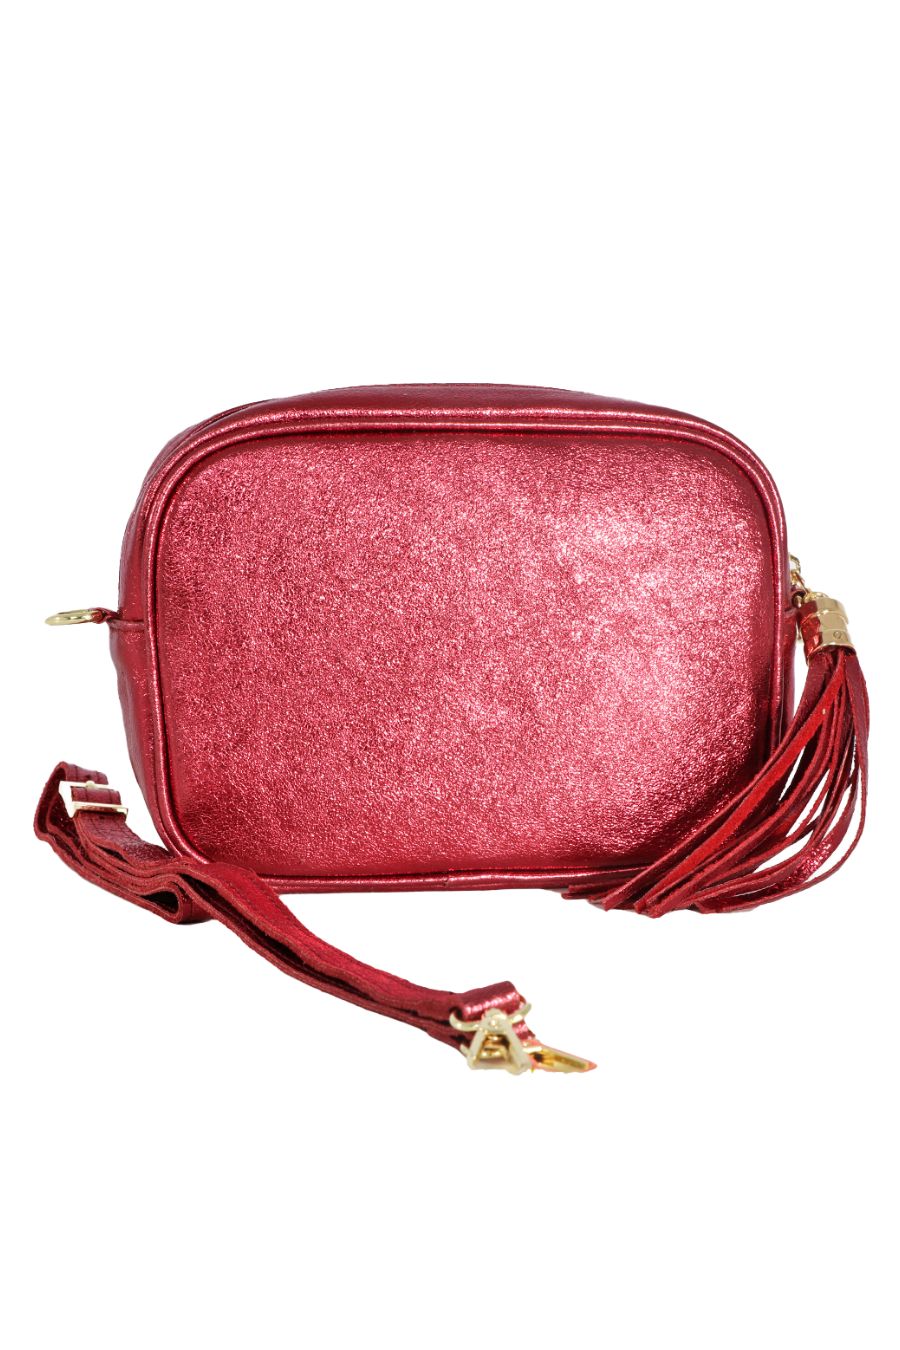 Metallic Red Genuine Italian Leather Camera Bag